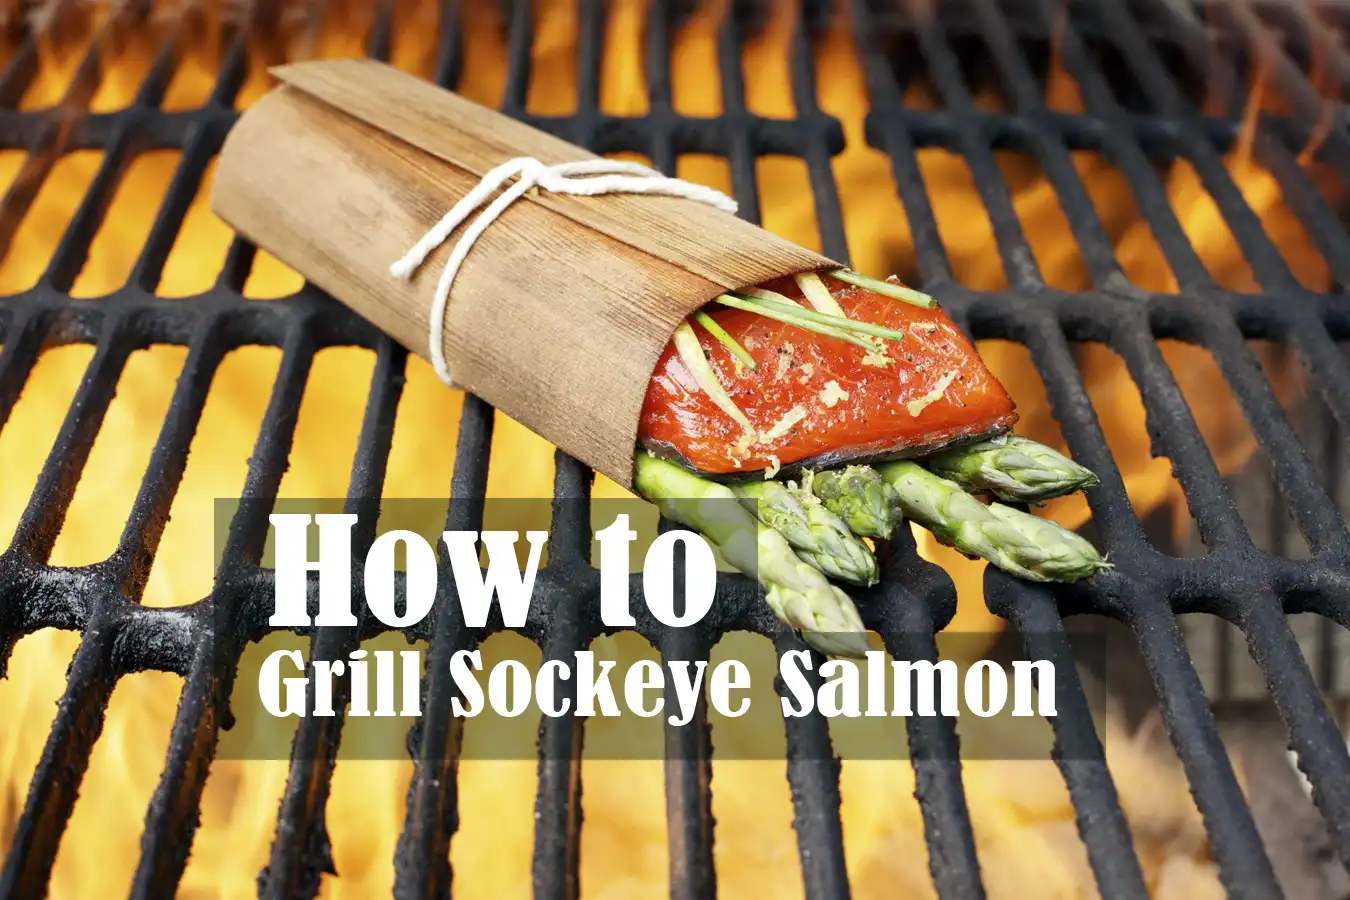 How to Grill Sockeye Salmon